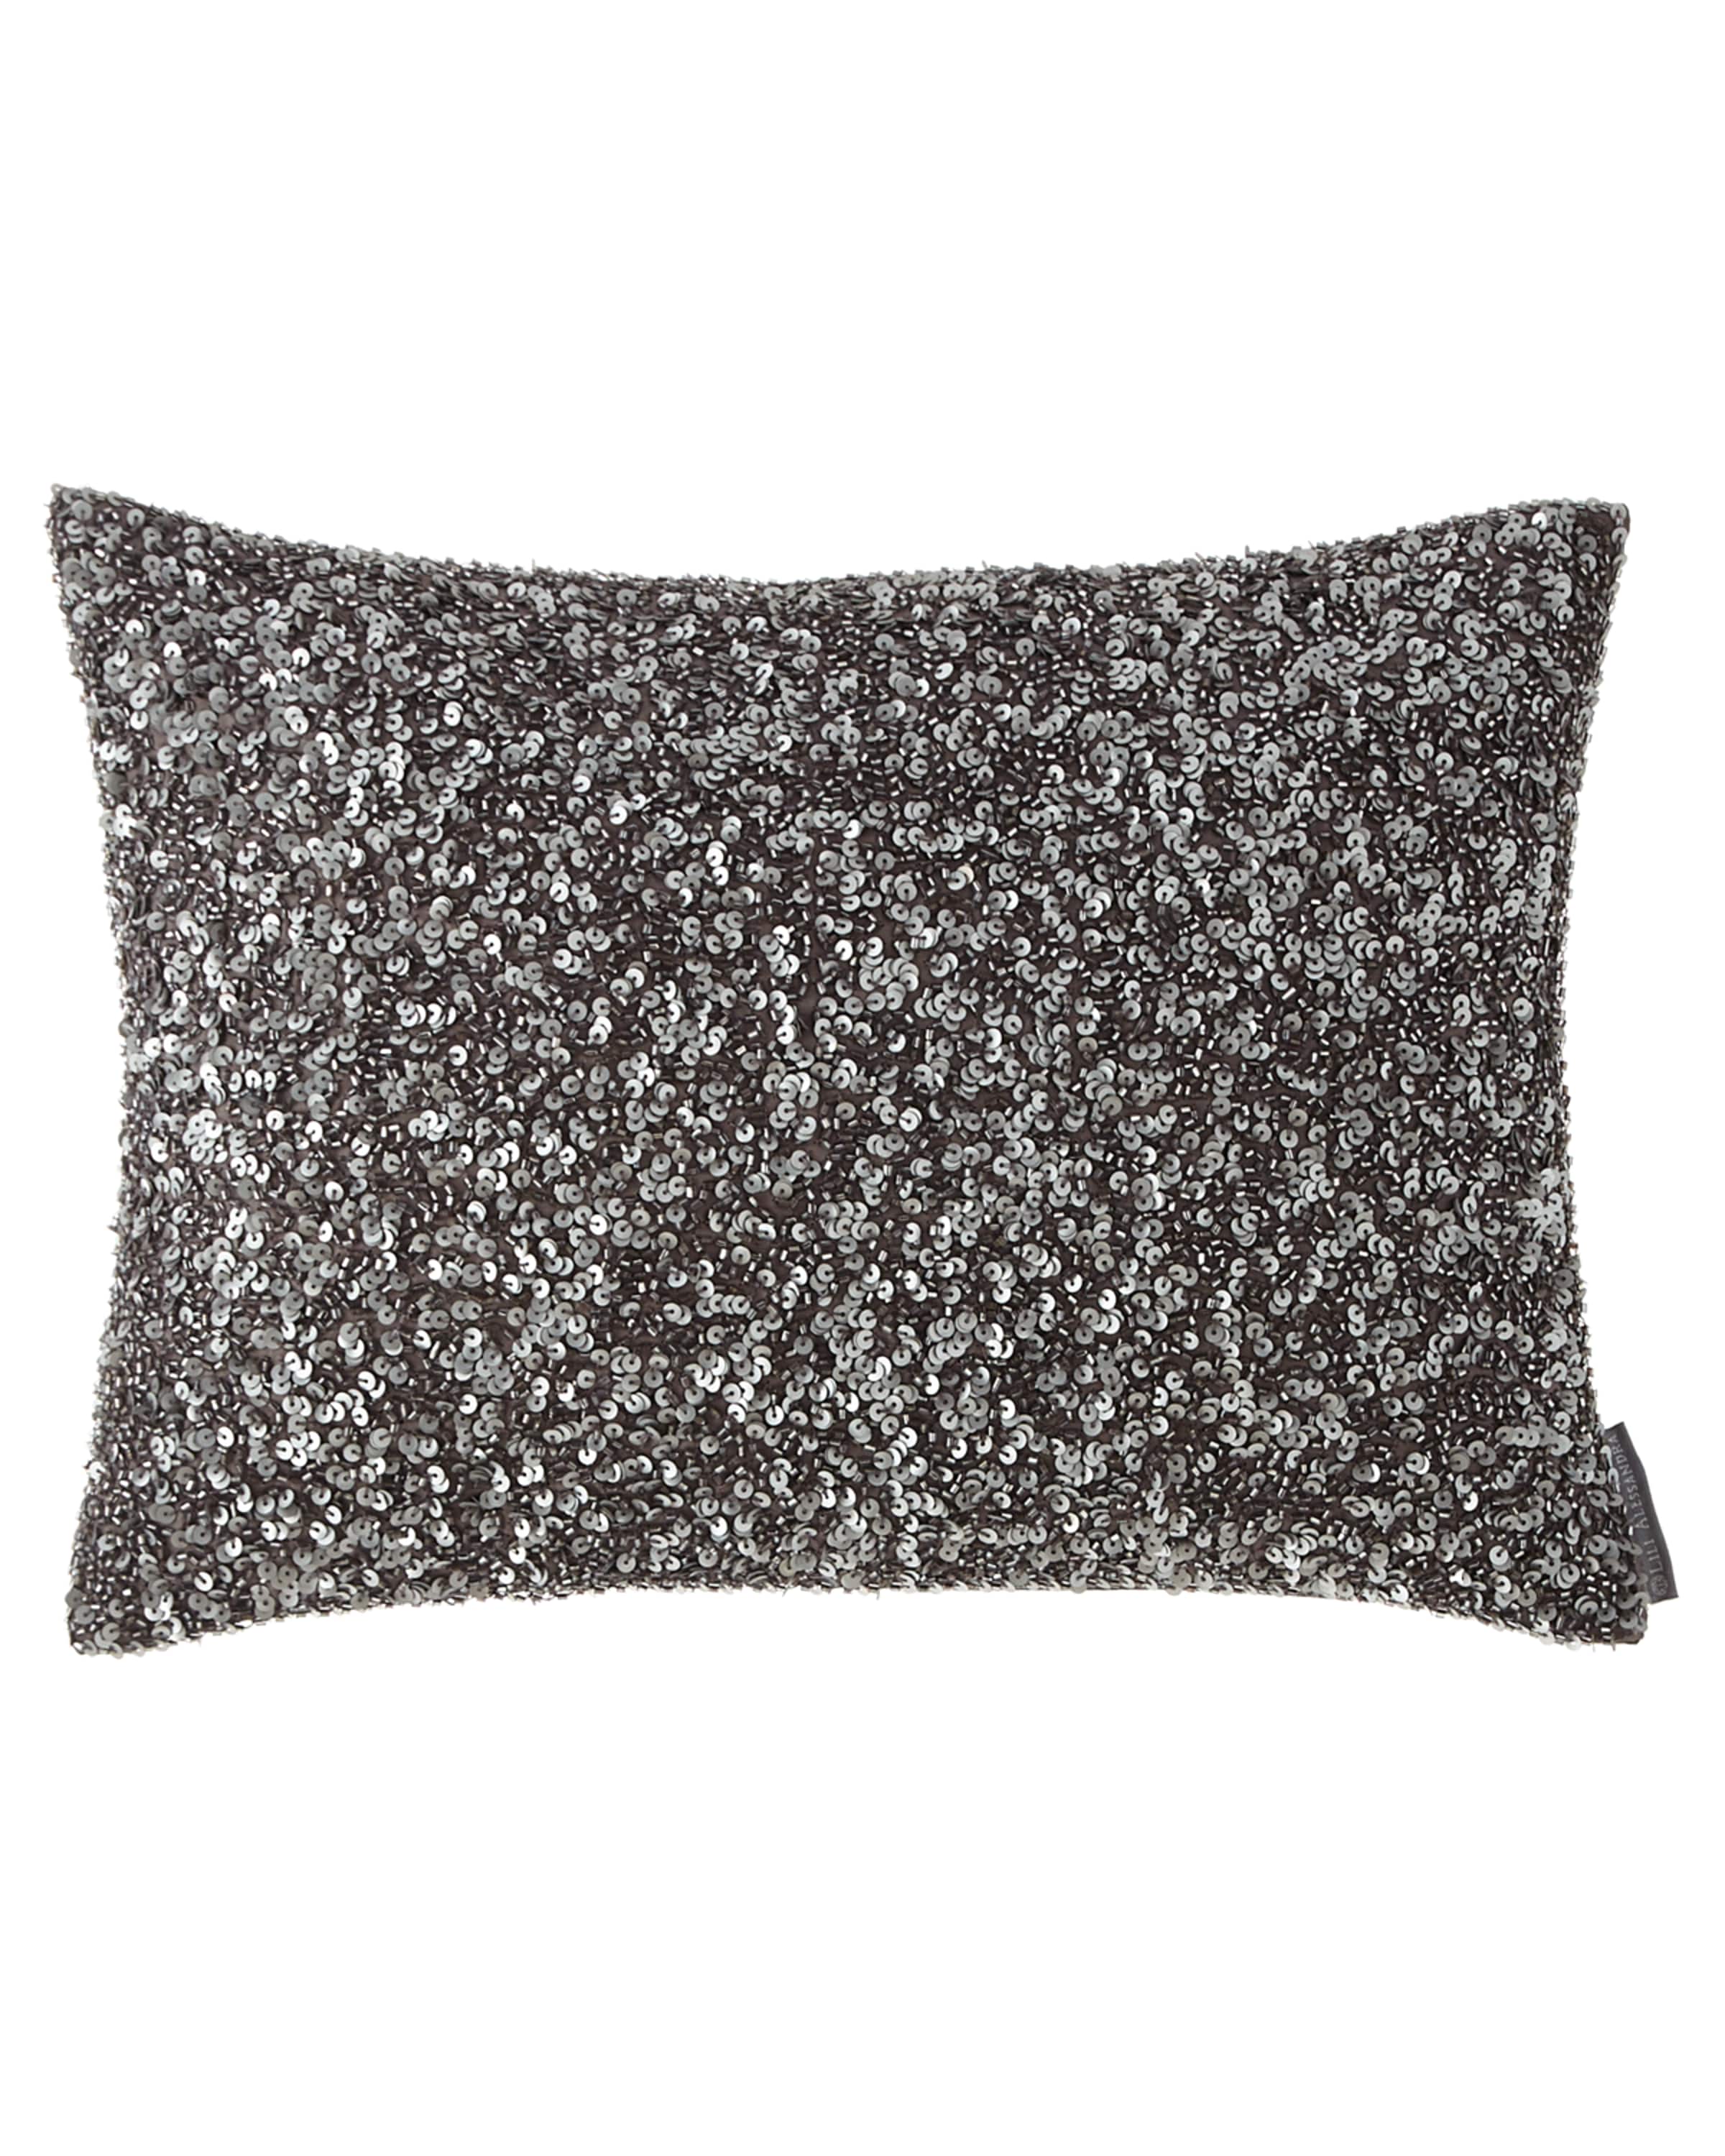 Lili Alessandra Jewel Small Rectangle Pillow